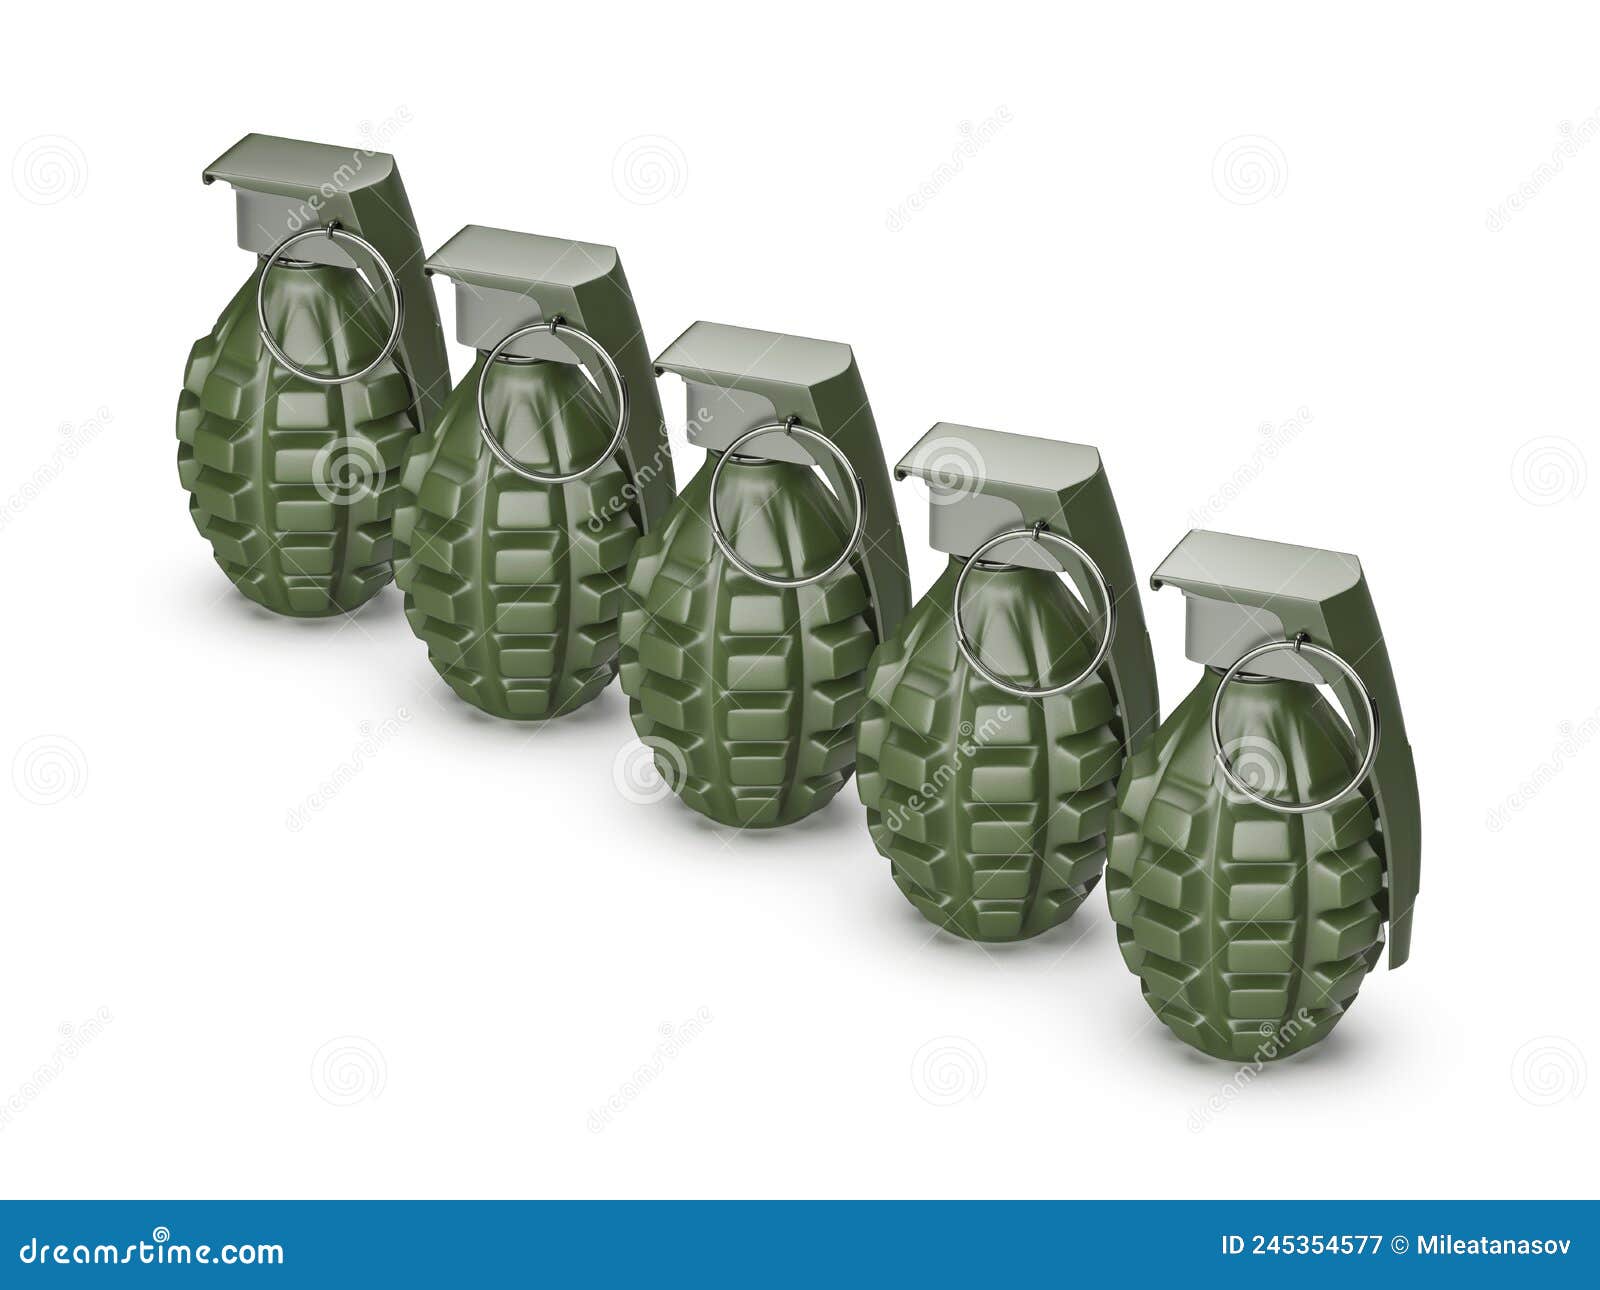 five fragmentation hand grenades